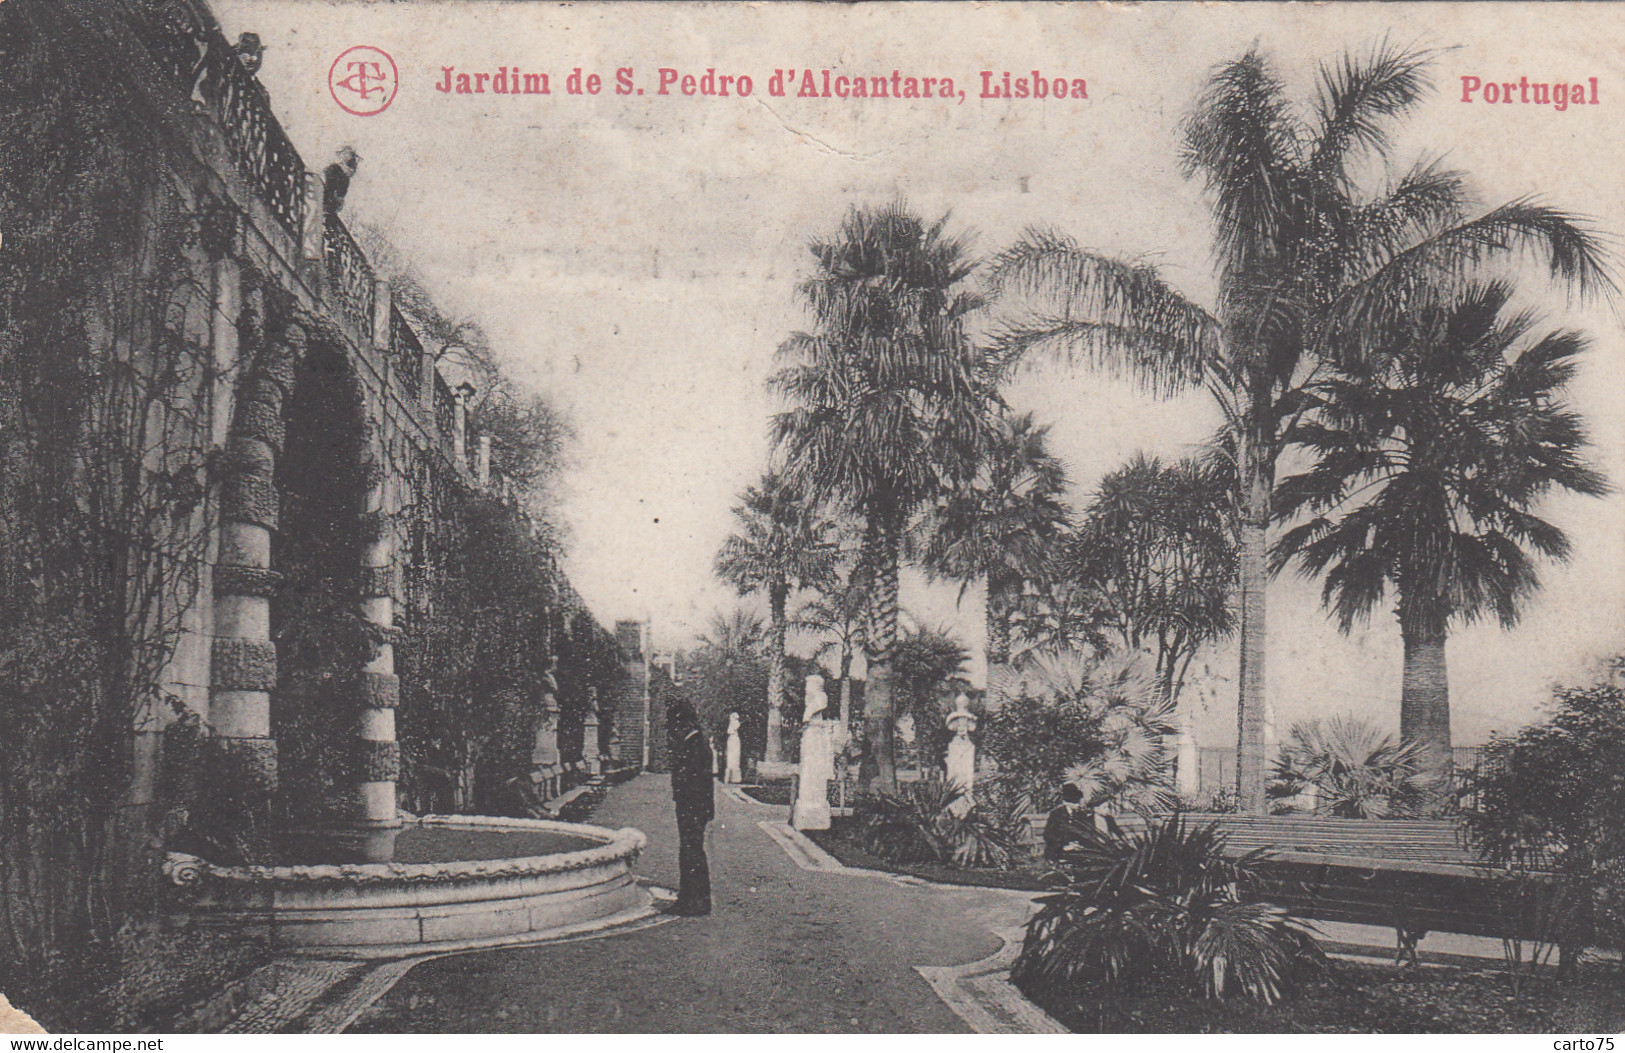 Portugal - Lisboa - Jardim De S. Pedro D'Alcantara - 1913 - Adressée à Gendarmerie La Canourgue Lozère - Lisboa